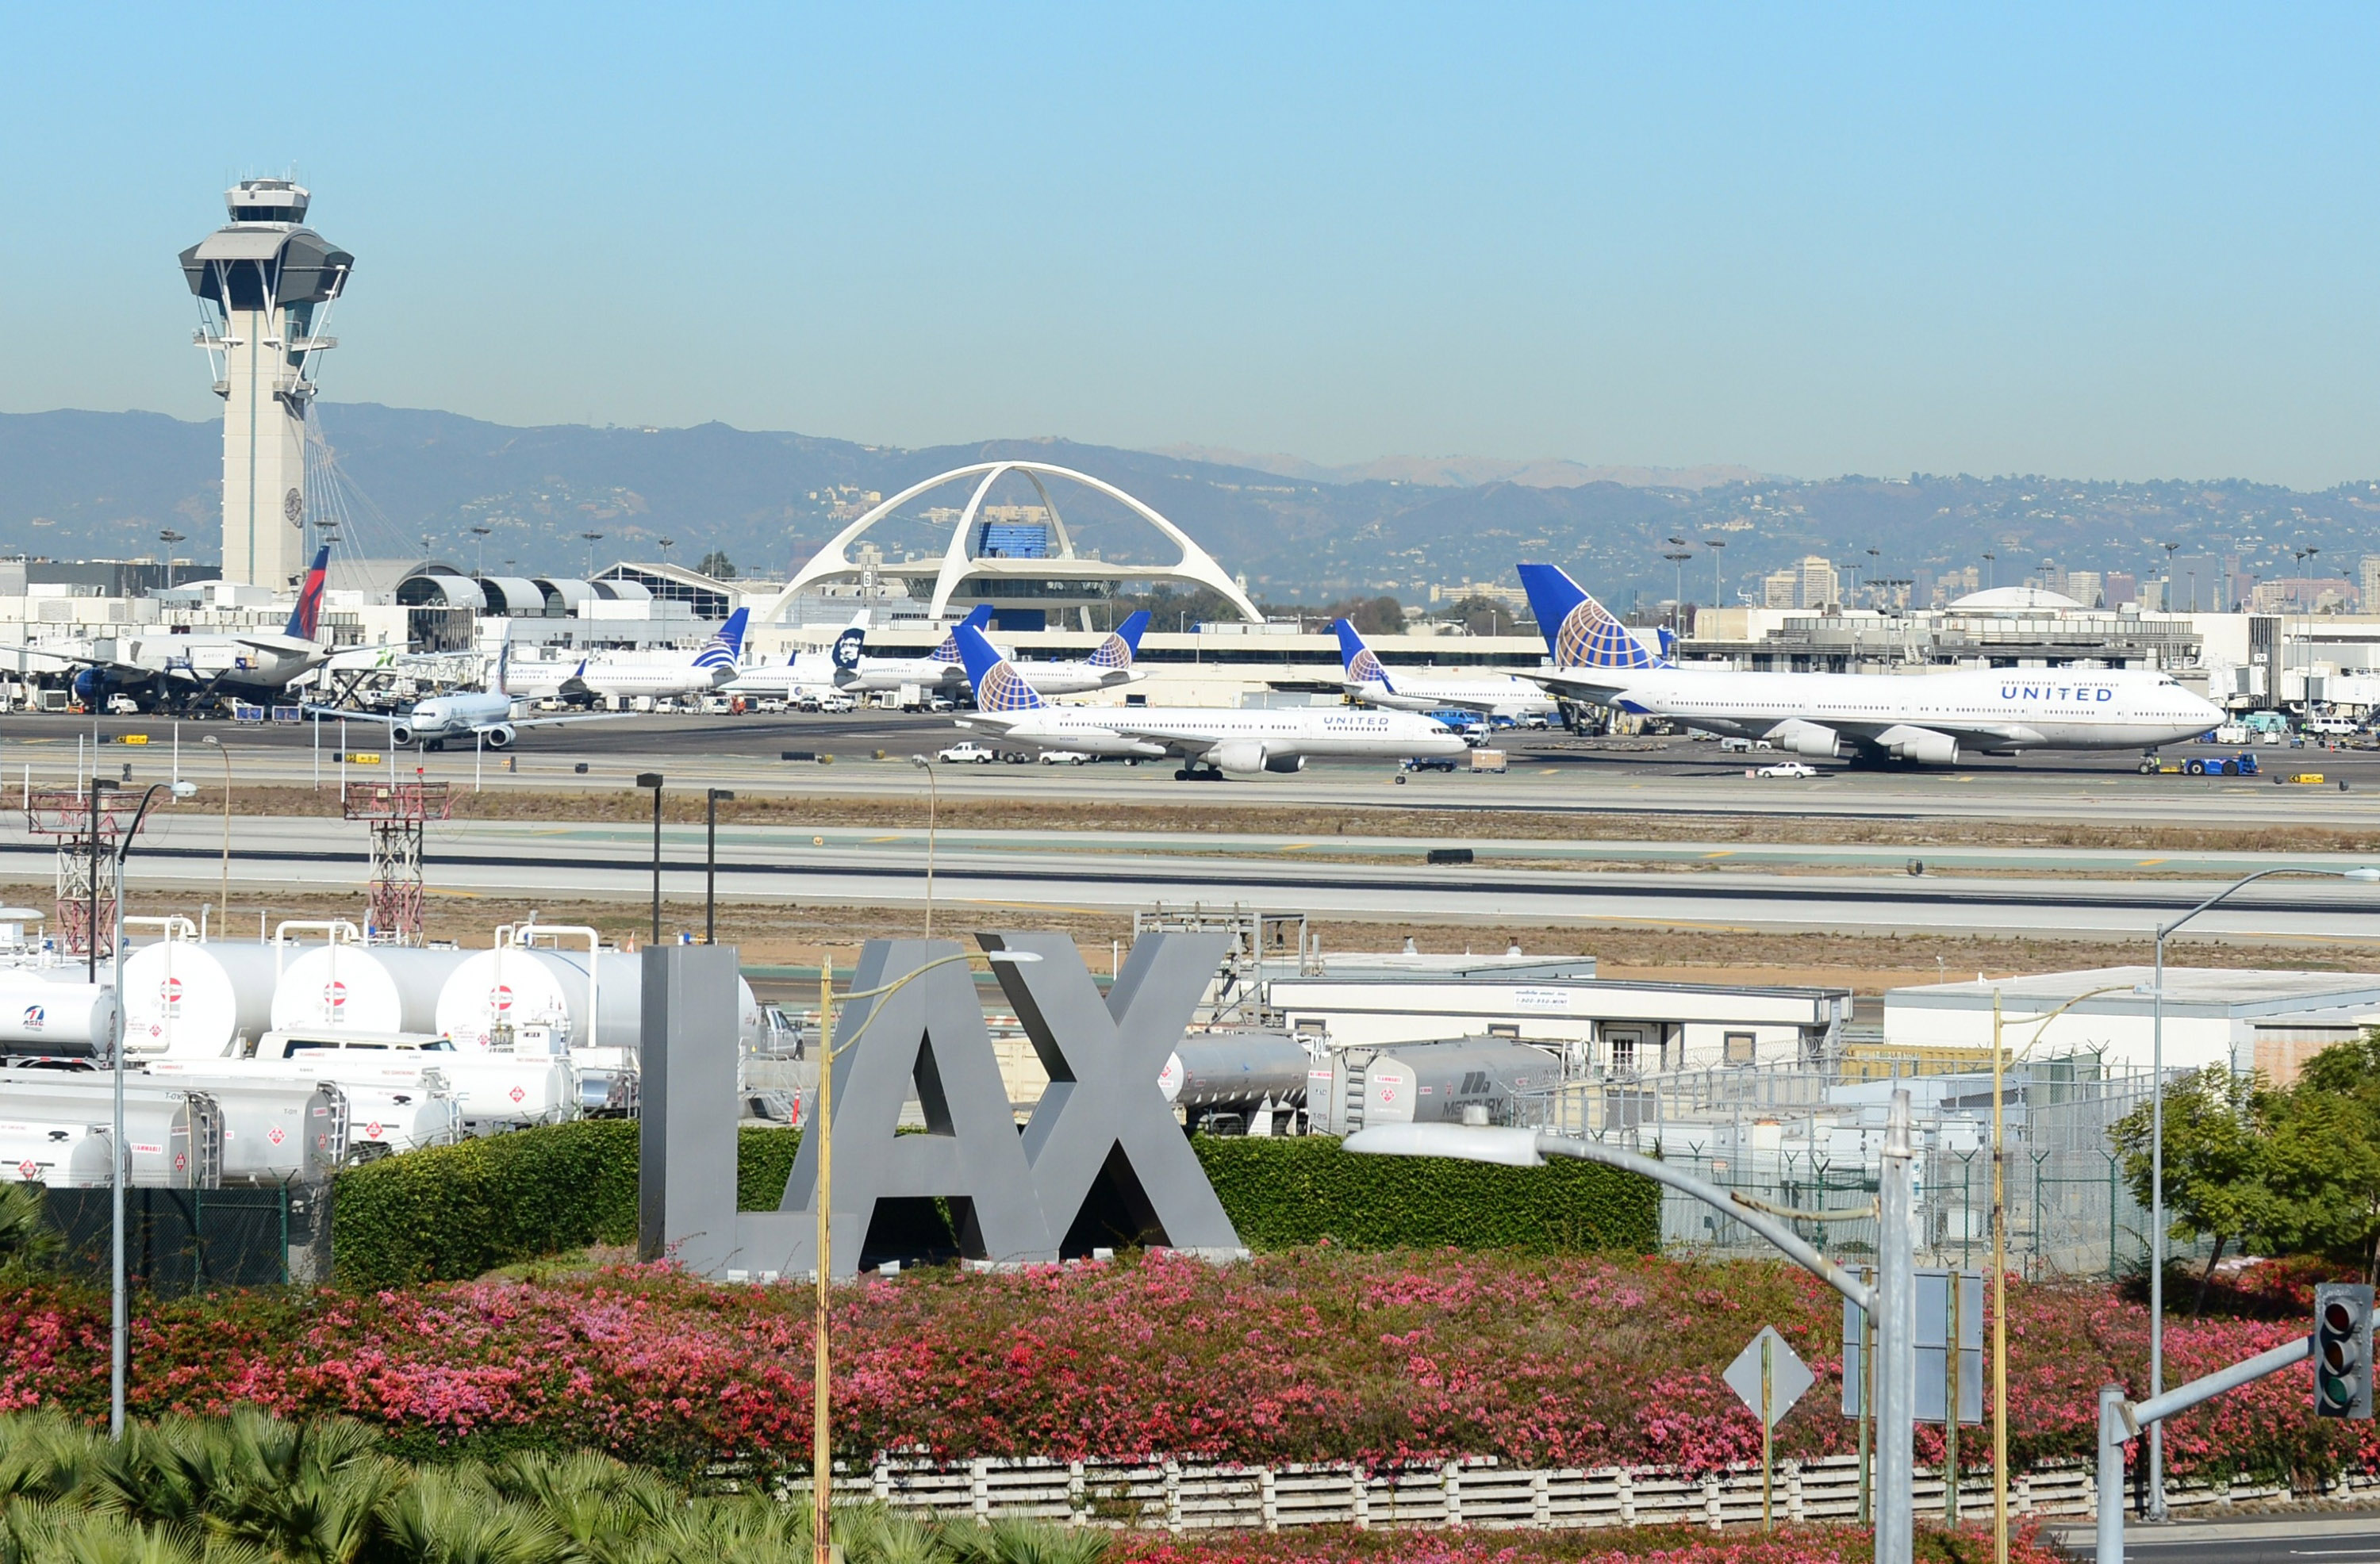 Аэропорт лос-анджелеса — как добраться, онлайн-табло, отзывы